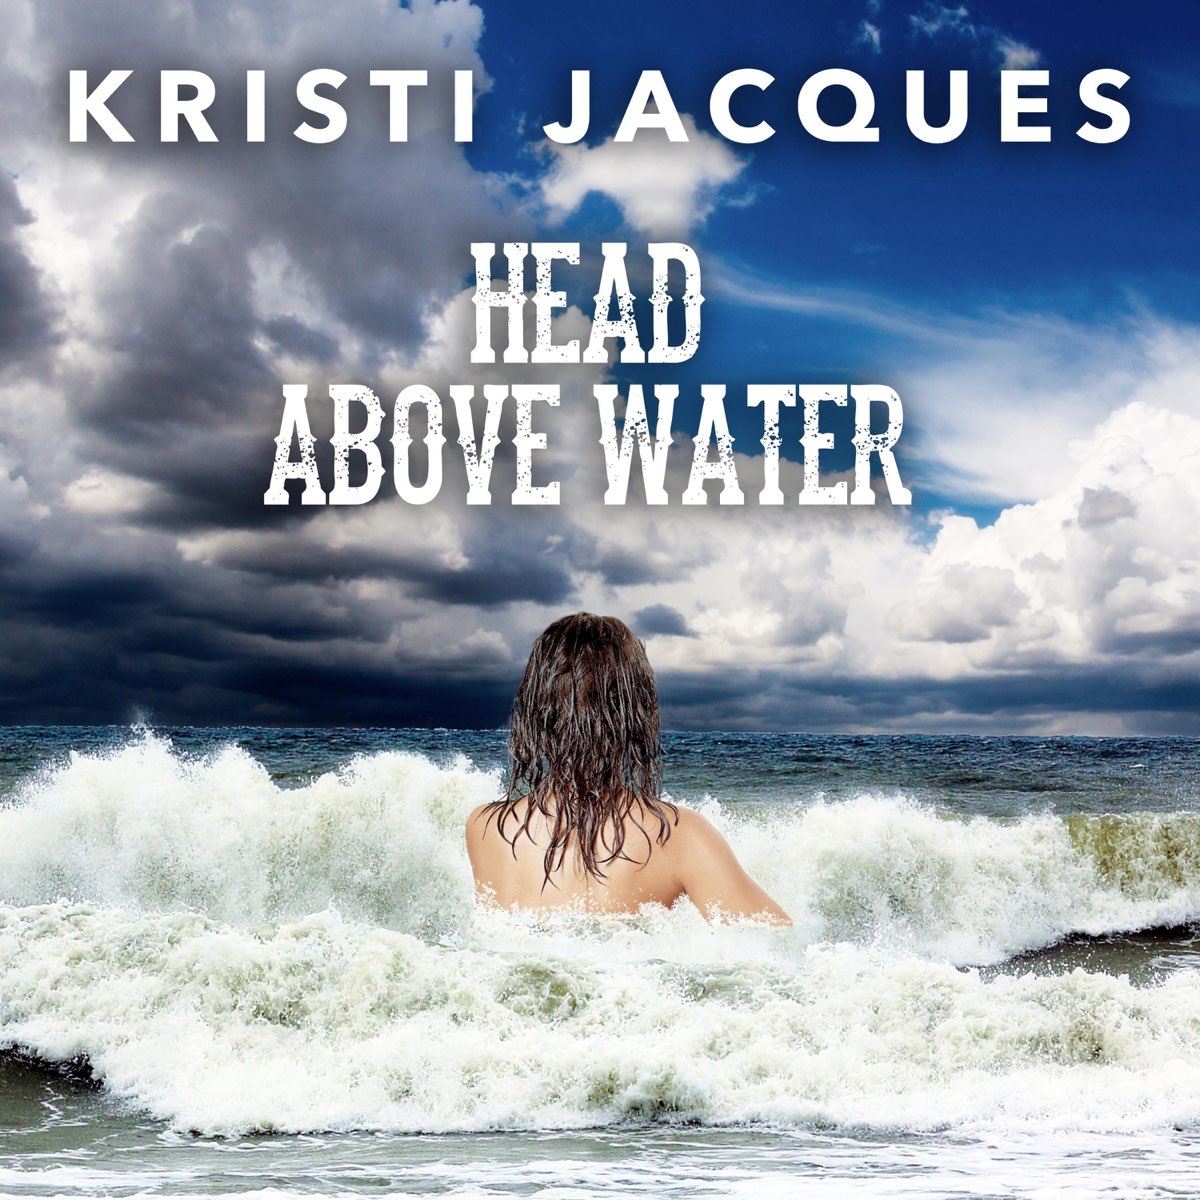 New Rock Releases:

Kristi Jacques #KristiJacquesMusic releases Head Above Water #HeadAboveWater #Rock #NewRock #NextWaveofRock #NWOCR #NewMusicAlert #NewRockReleases #KristiJacques
July 14, 2023

🎧 youtu.be/g3UtmYAnkLw